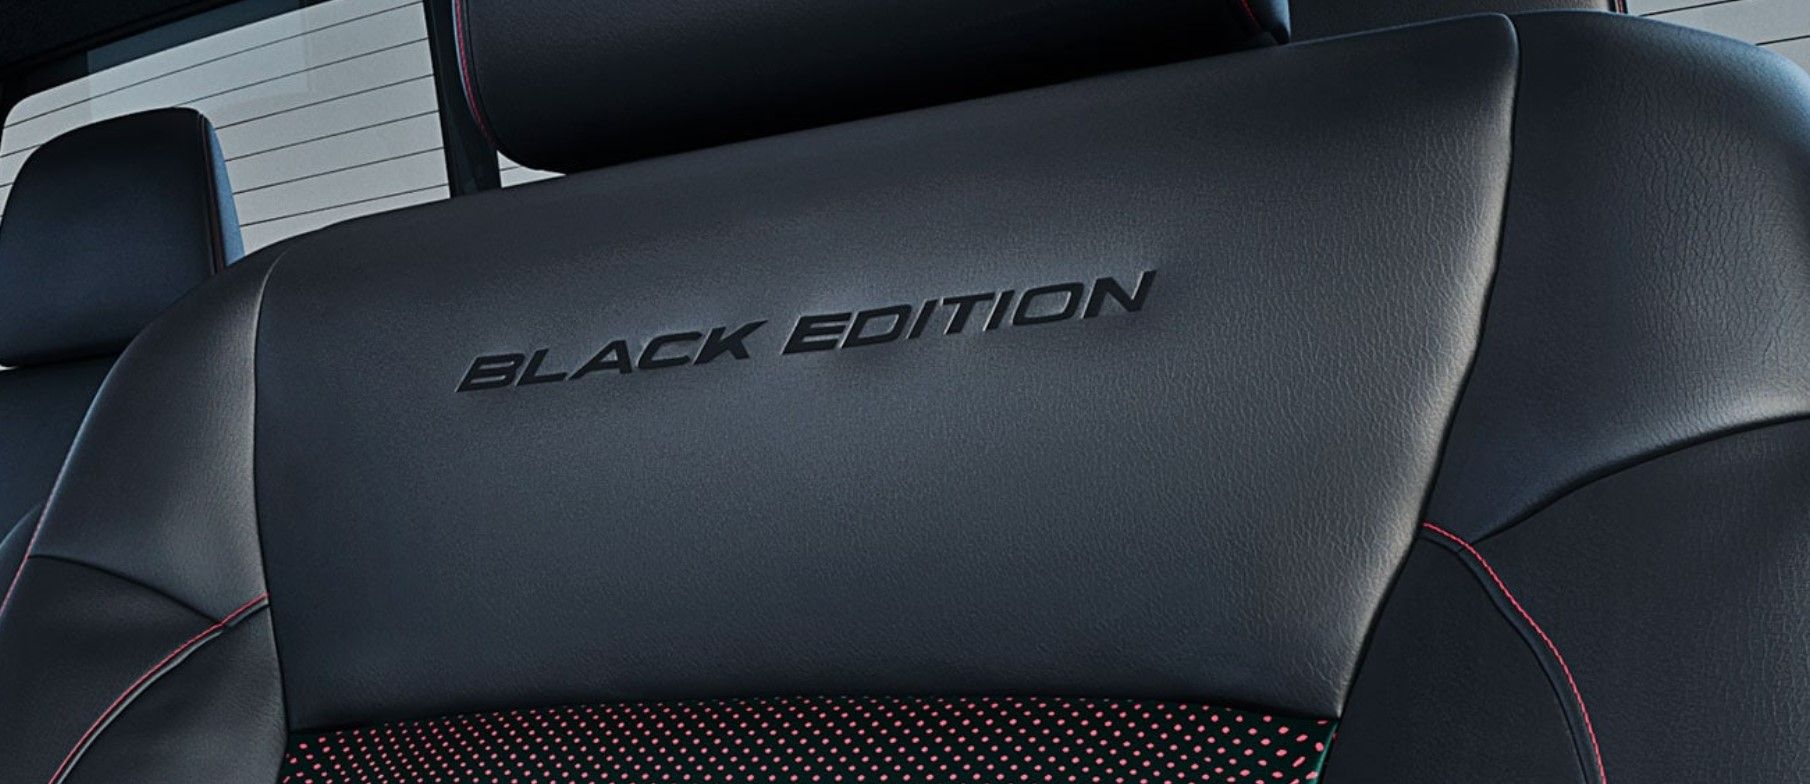 Honda Ridgeline Black Edition seat with logo